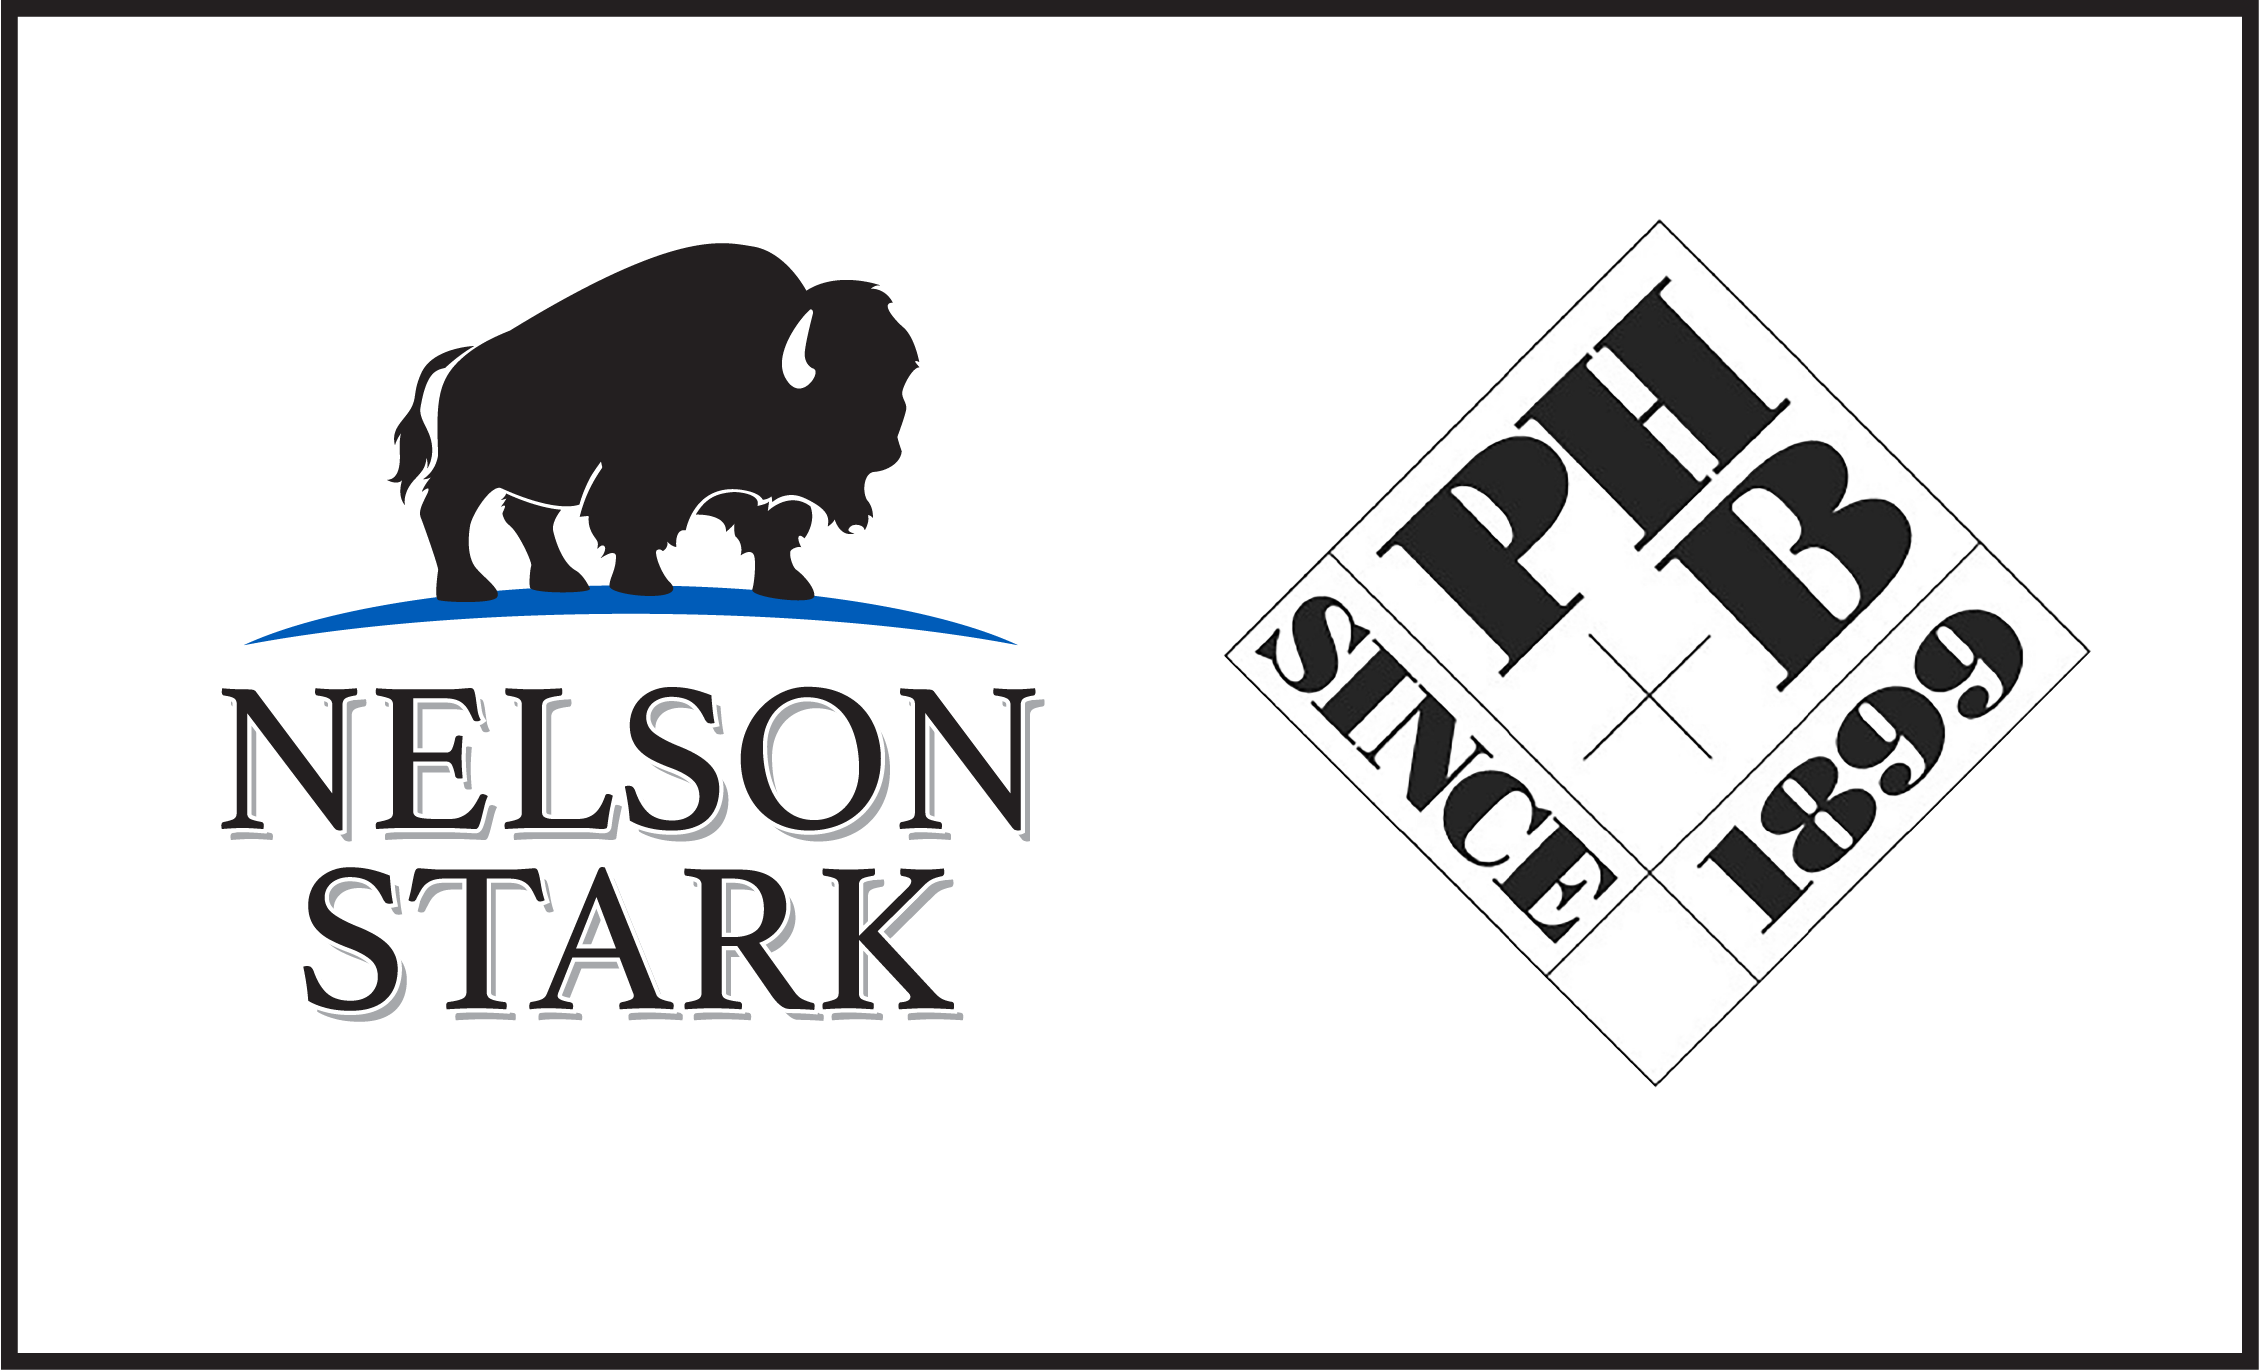 Nelson Stark/PH&B